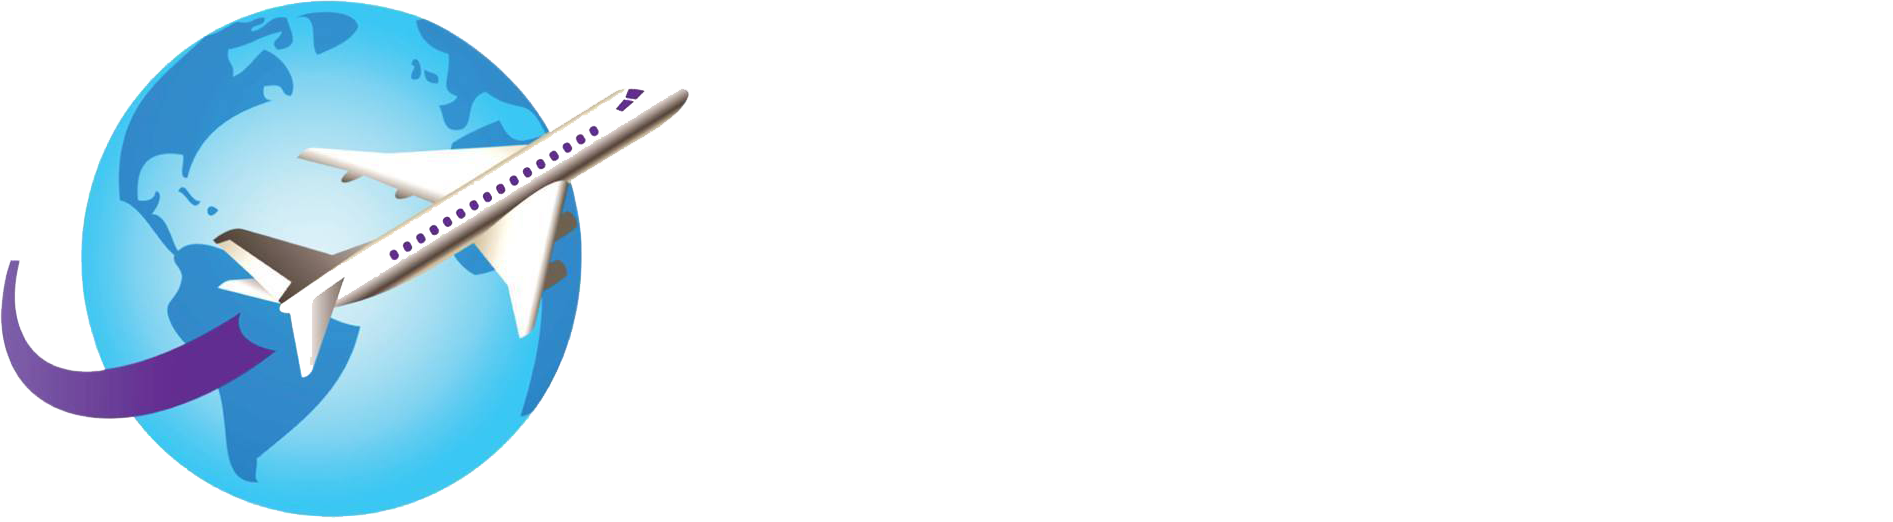 Get Travels n Tourism